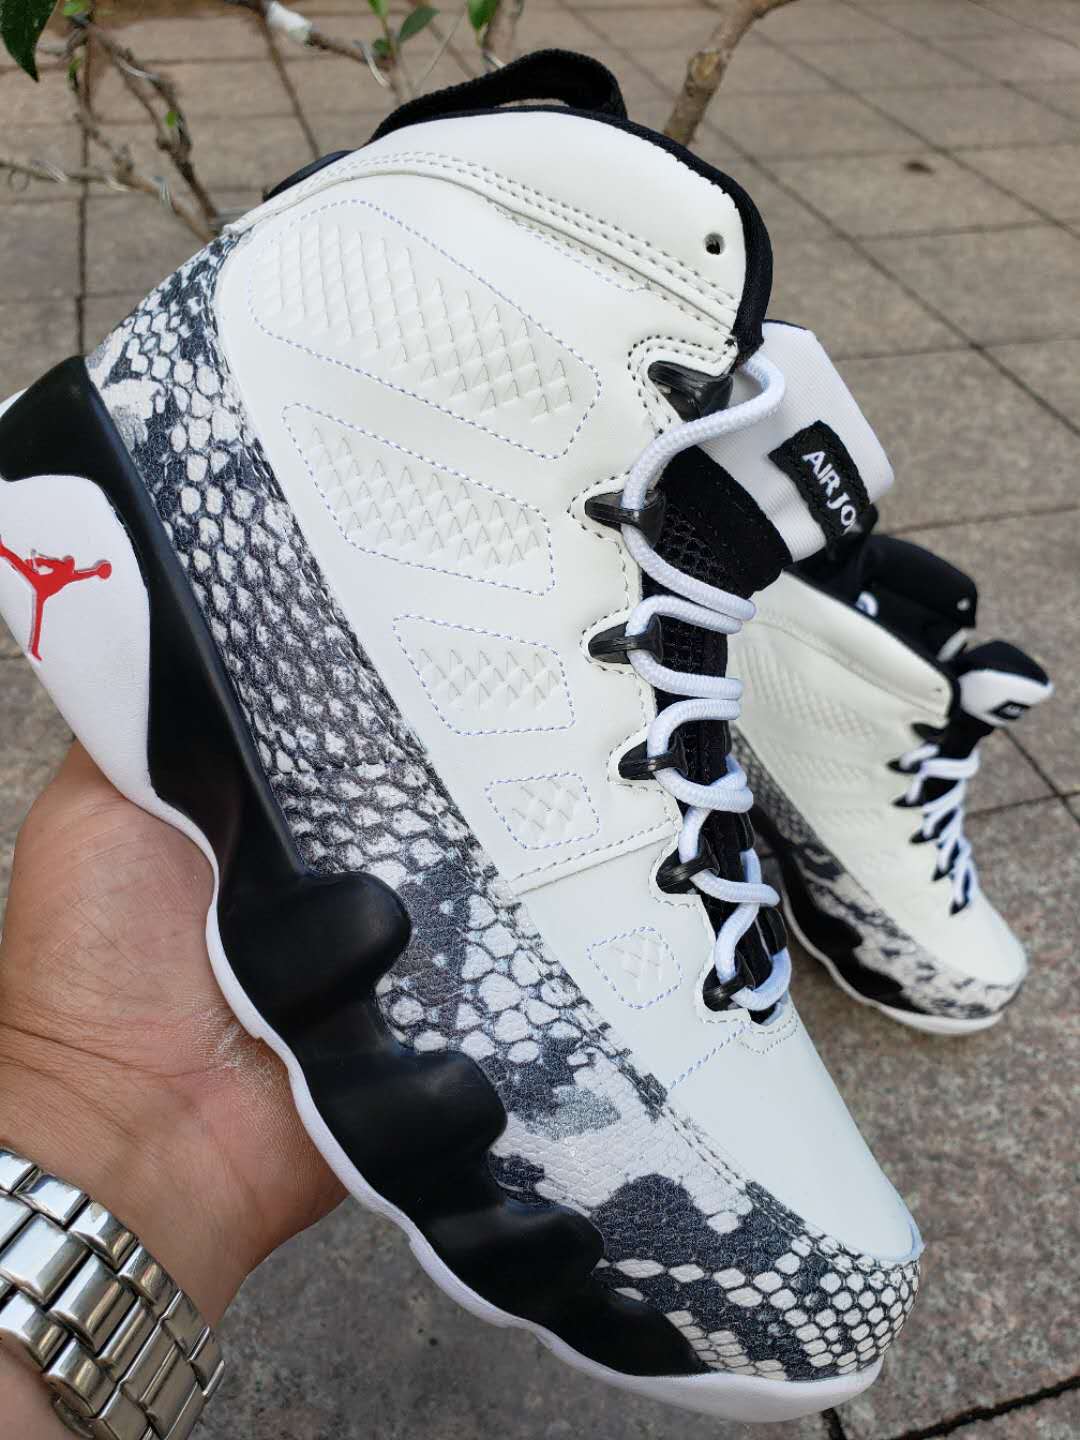 2019 Jordan 9 Retro SnakeSkin White Black Shoes